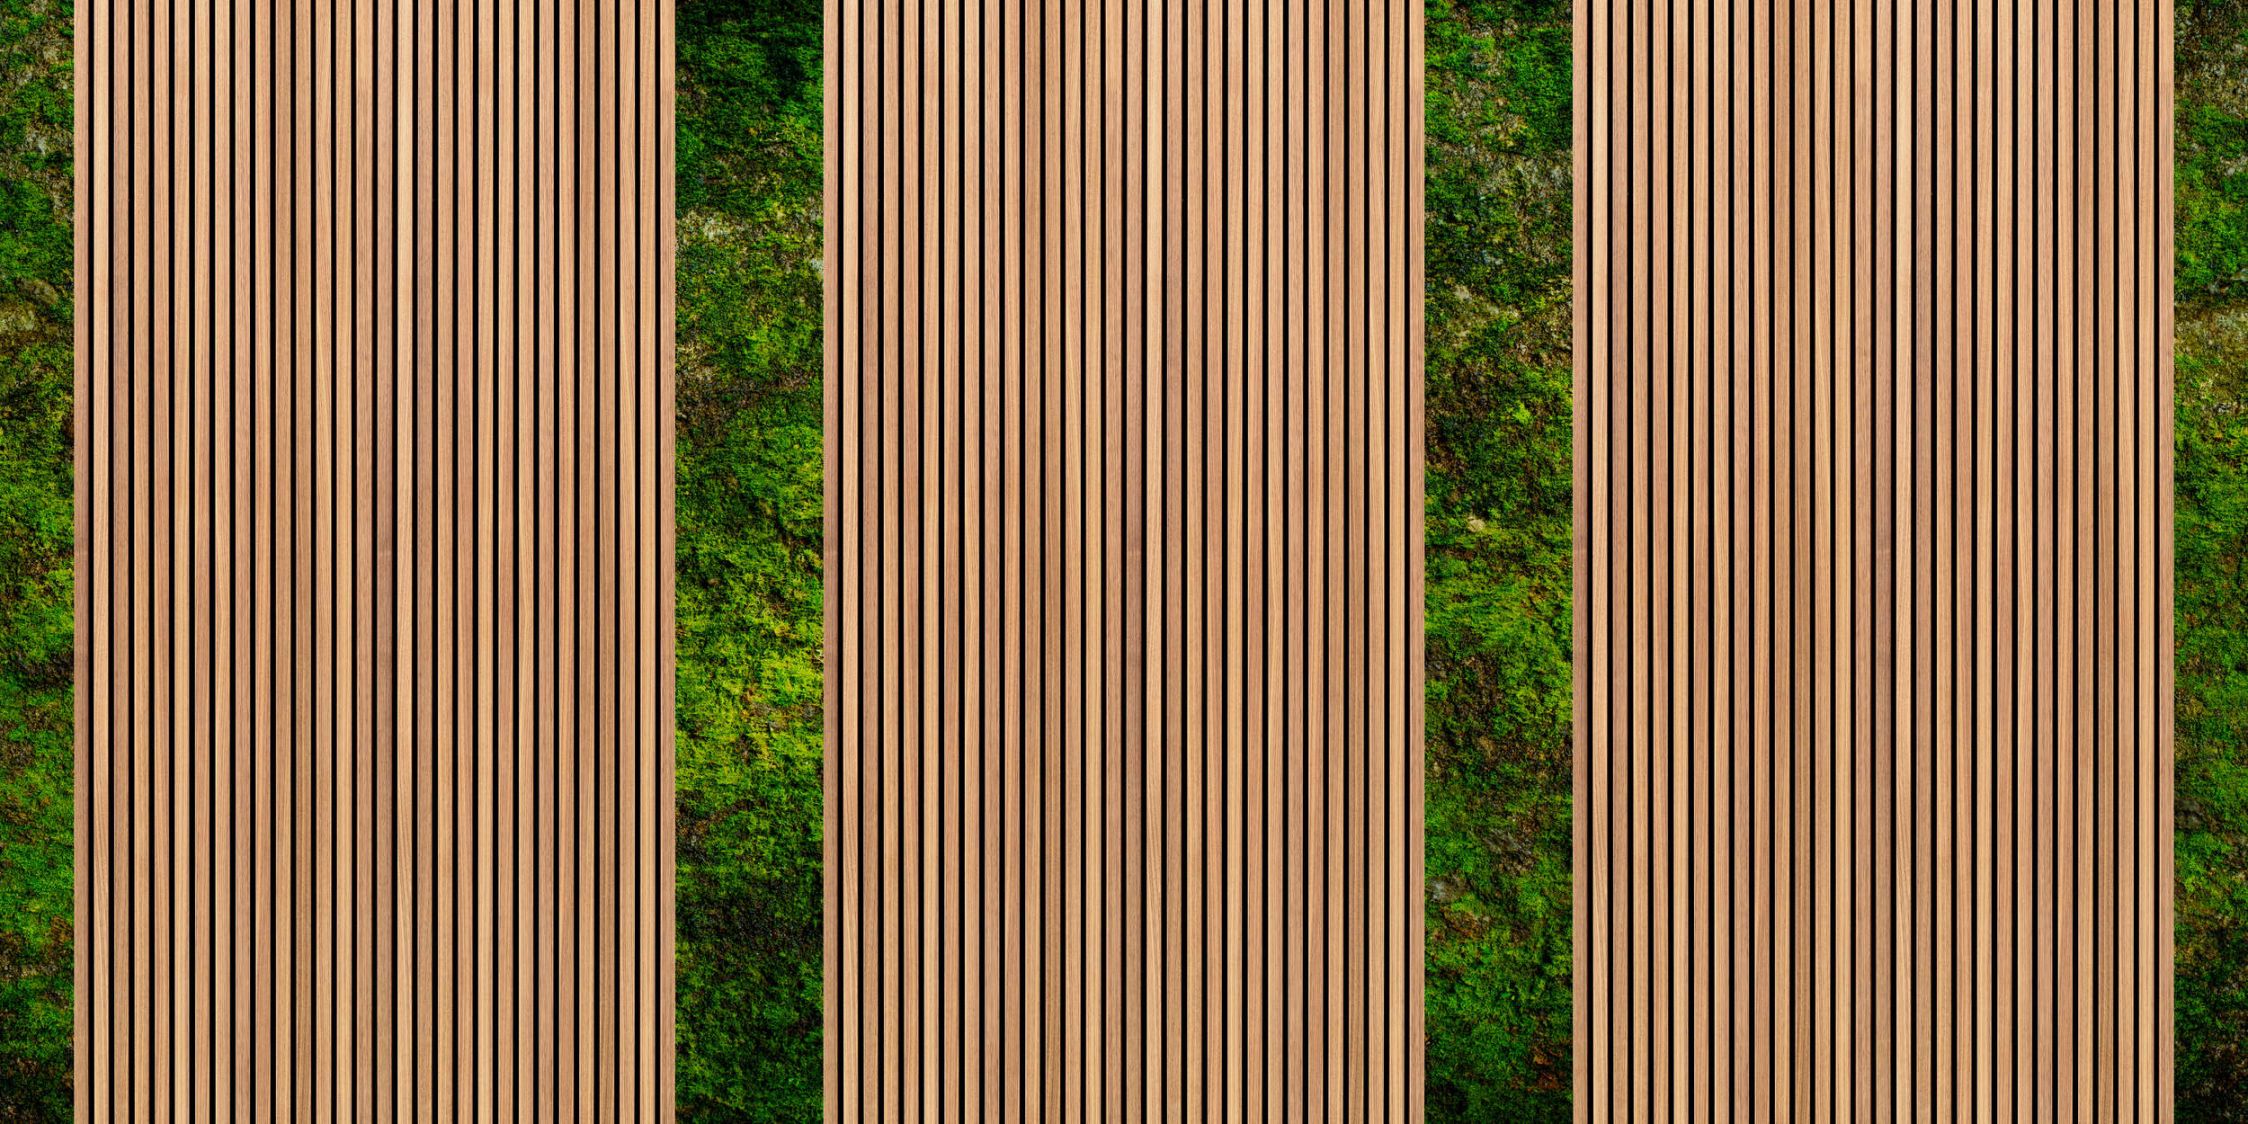             Fotomural »panel 2« - Paneles anchos de madera y musgo - Tela no tejida lisa mate
        